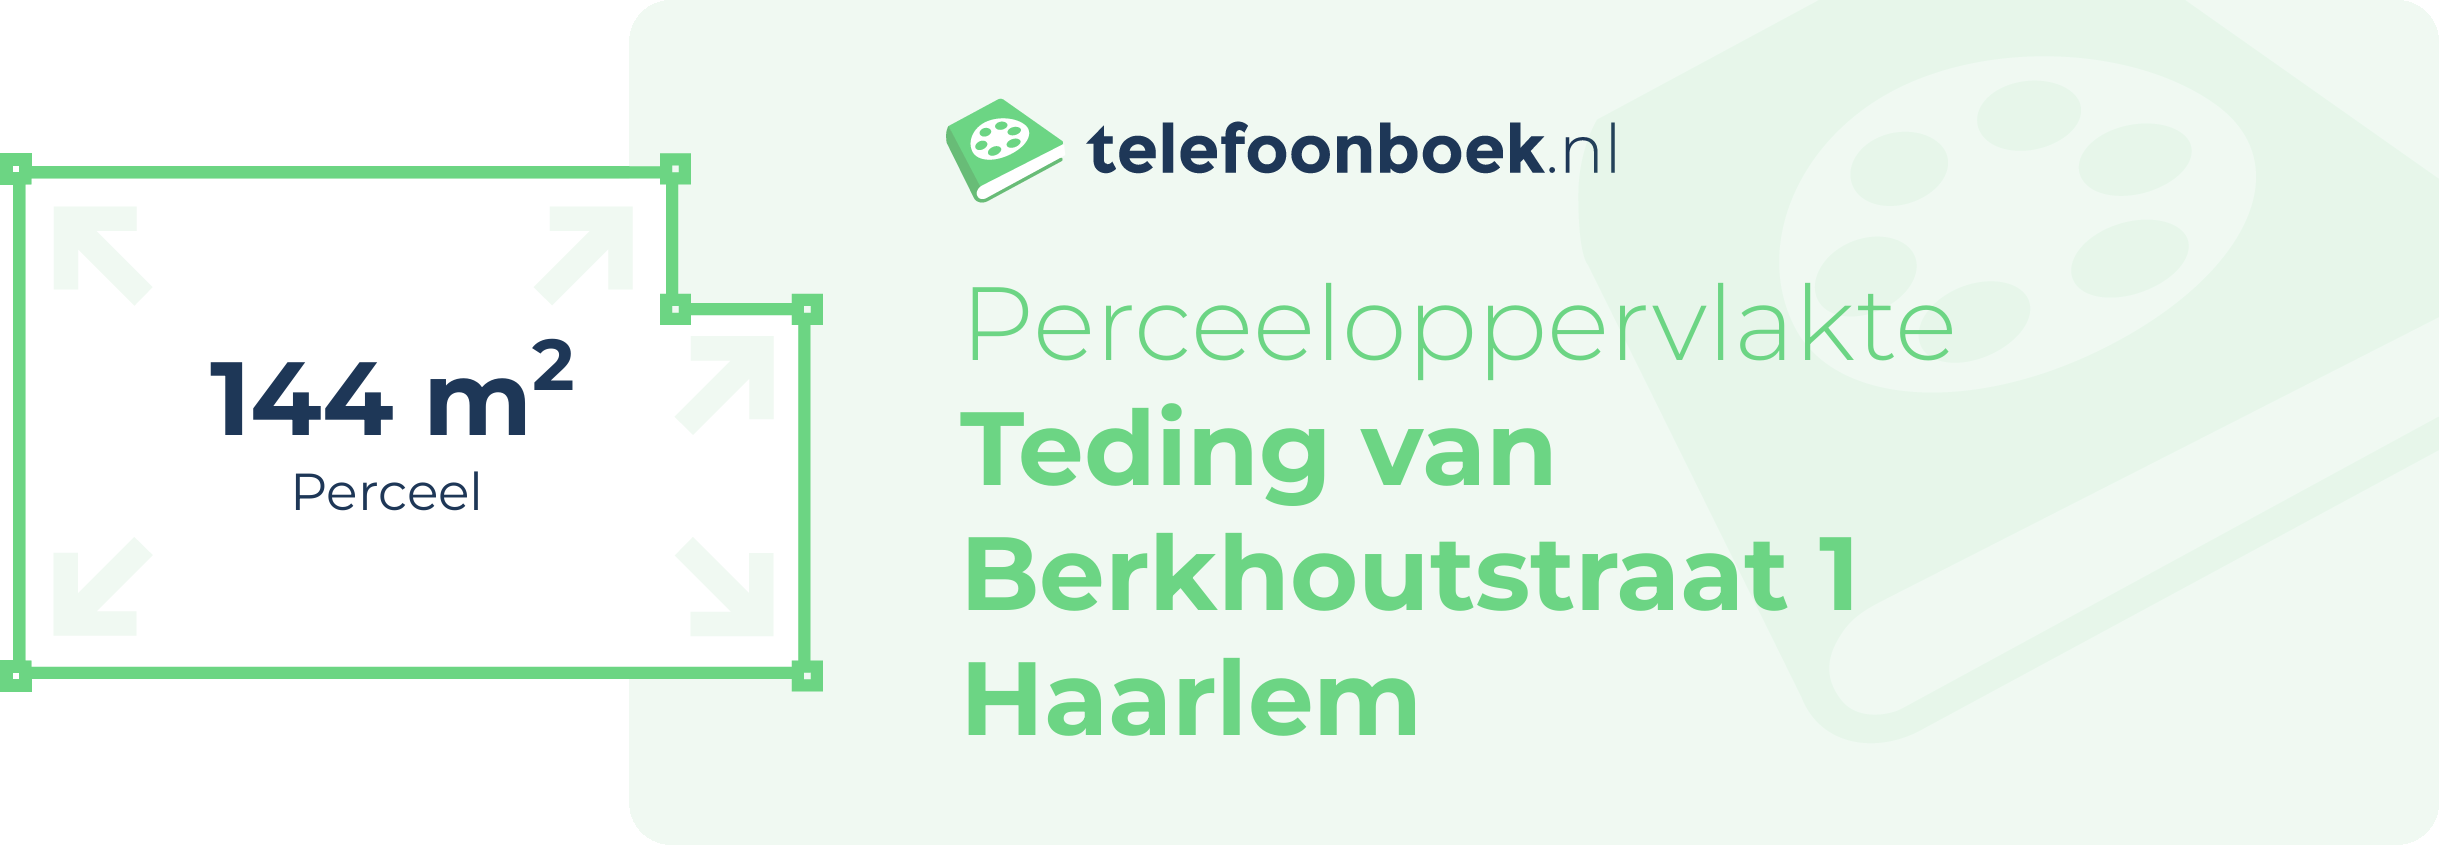 Perceeloppervlakte Teding Van Berkhoutstraat 1 Haarlem